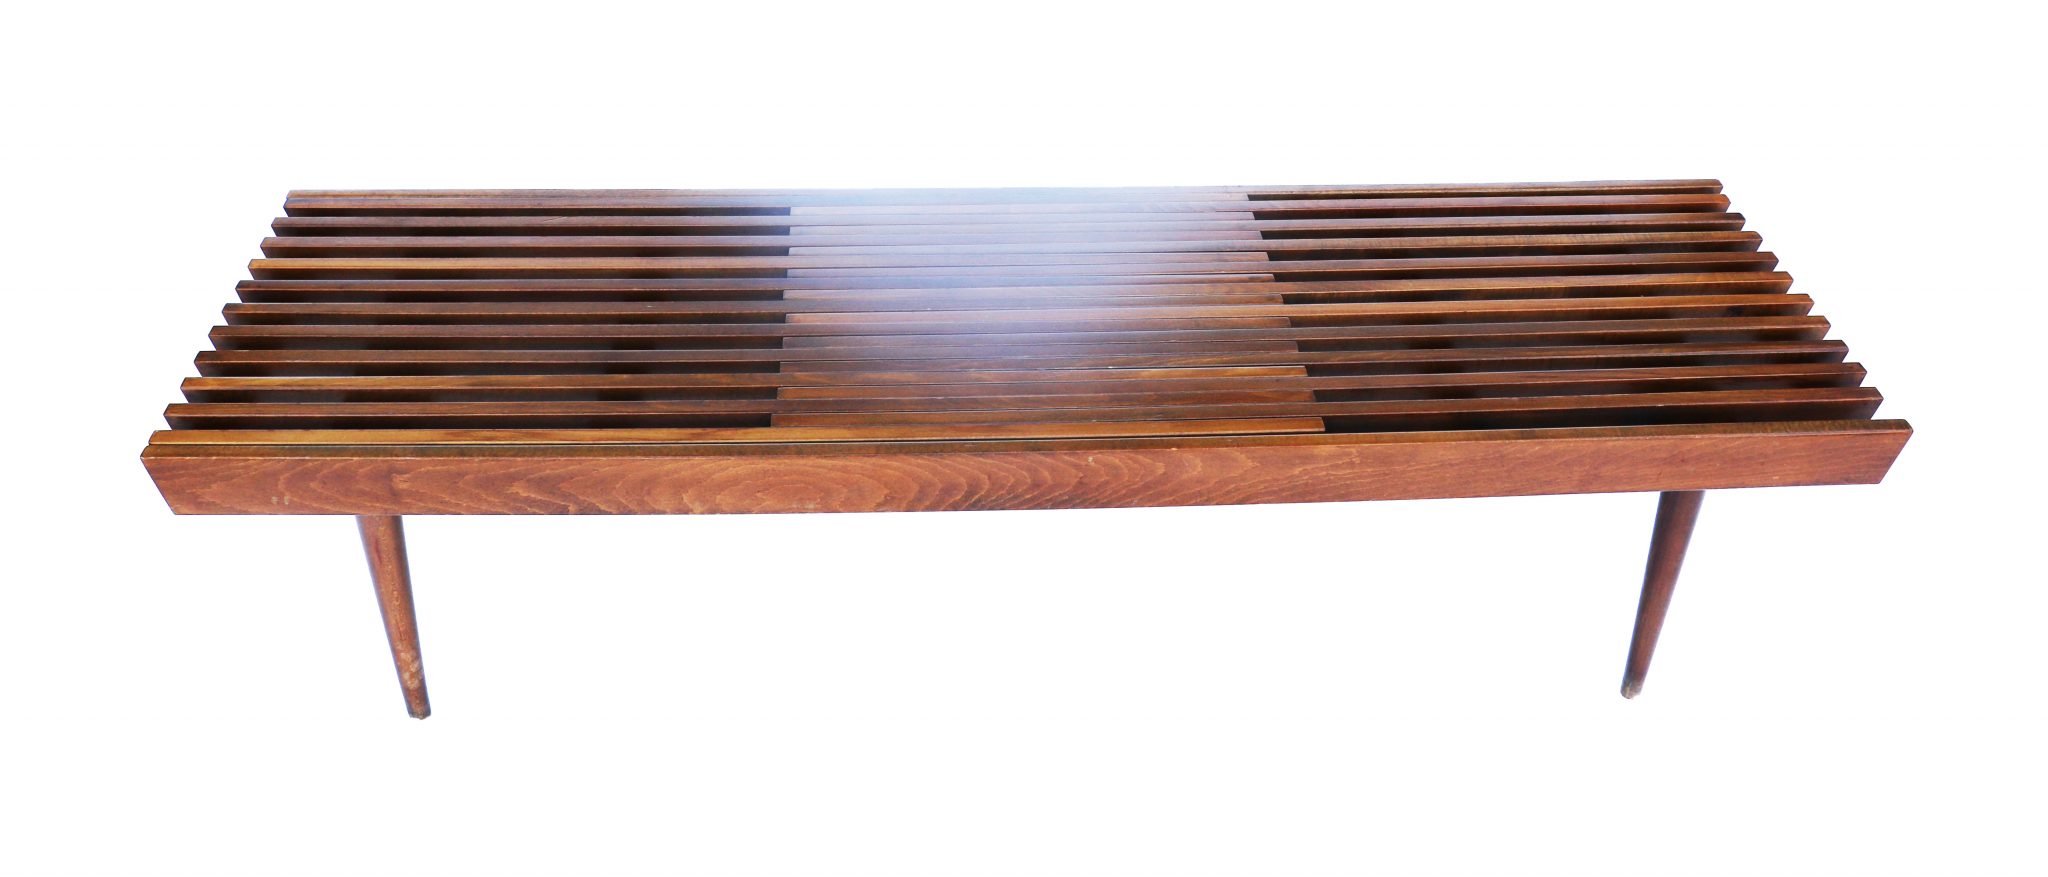 wood coffee table bench photo - 5